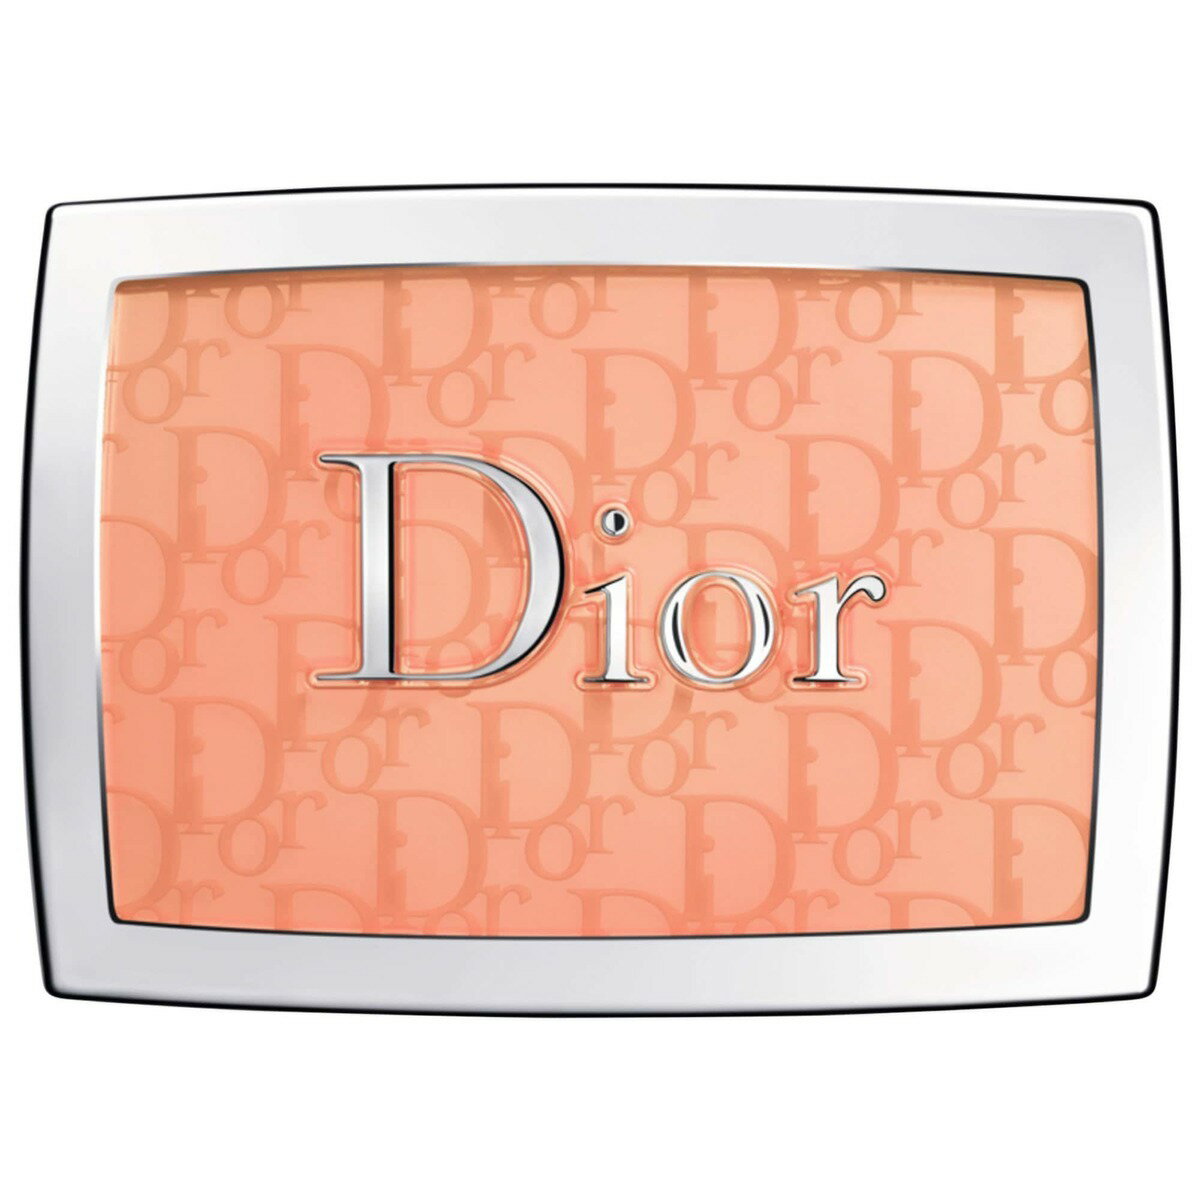 Dior『ディオールバックステージロージーグロウ』